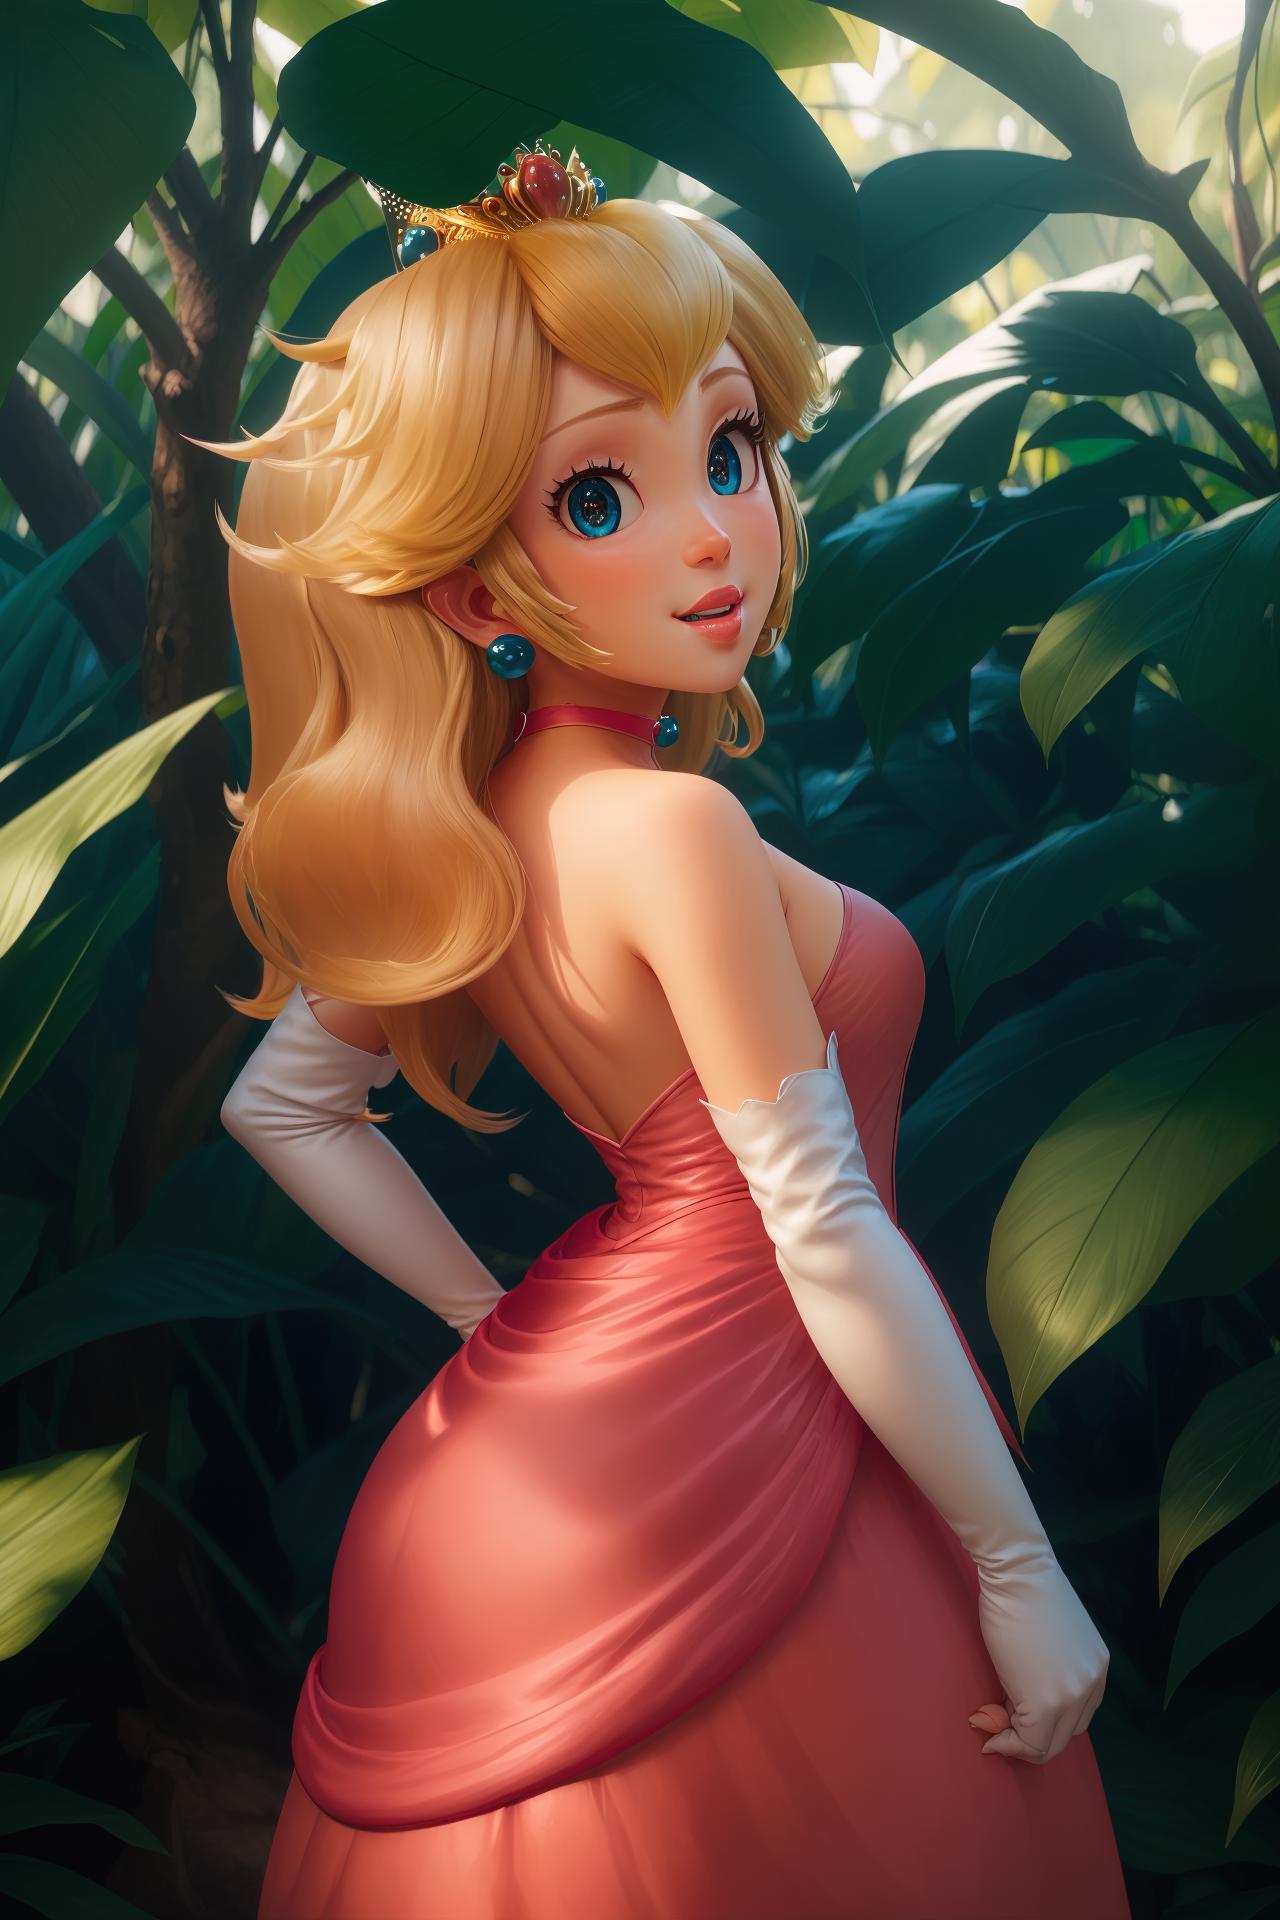 Princess Peach - Nintendo The Super Mario Bros. Movie (Illumination Entertainment Animation Style) image by HeteropodaMaxima